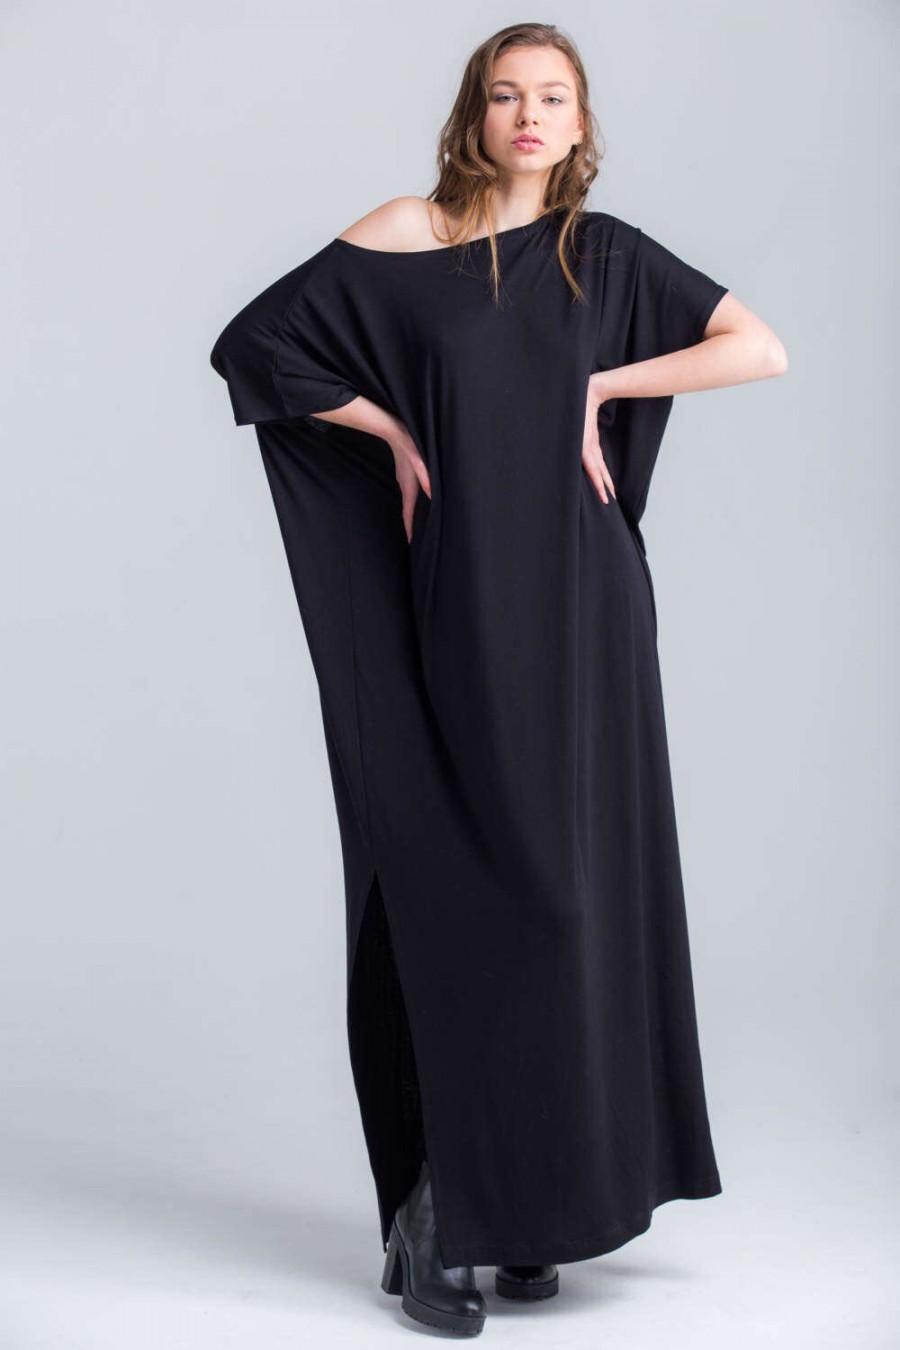 Mariage - Black Maxi Dress , Oversized Dress , Infinity Dress , Plus Size Dress , Party Dress A0027